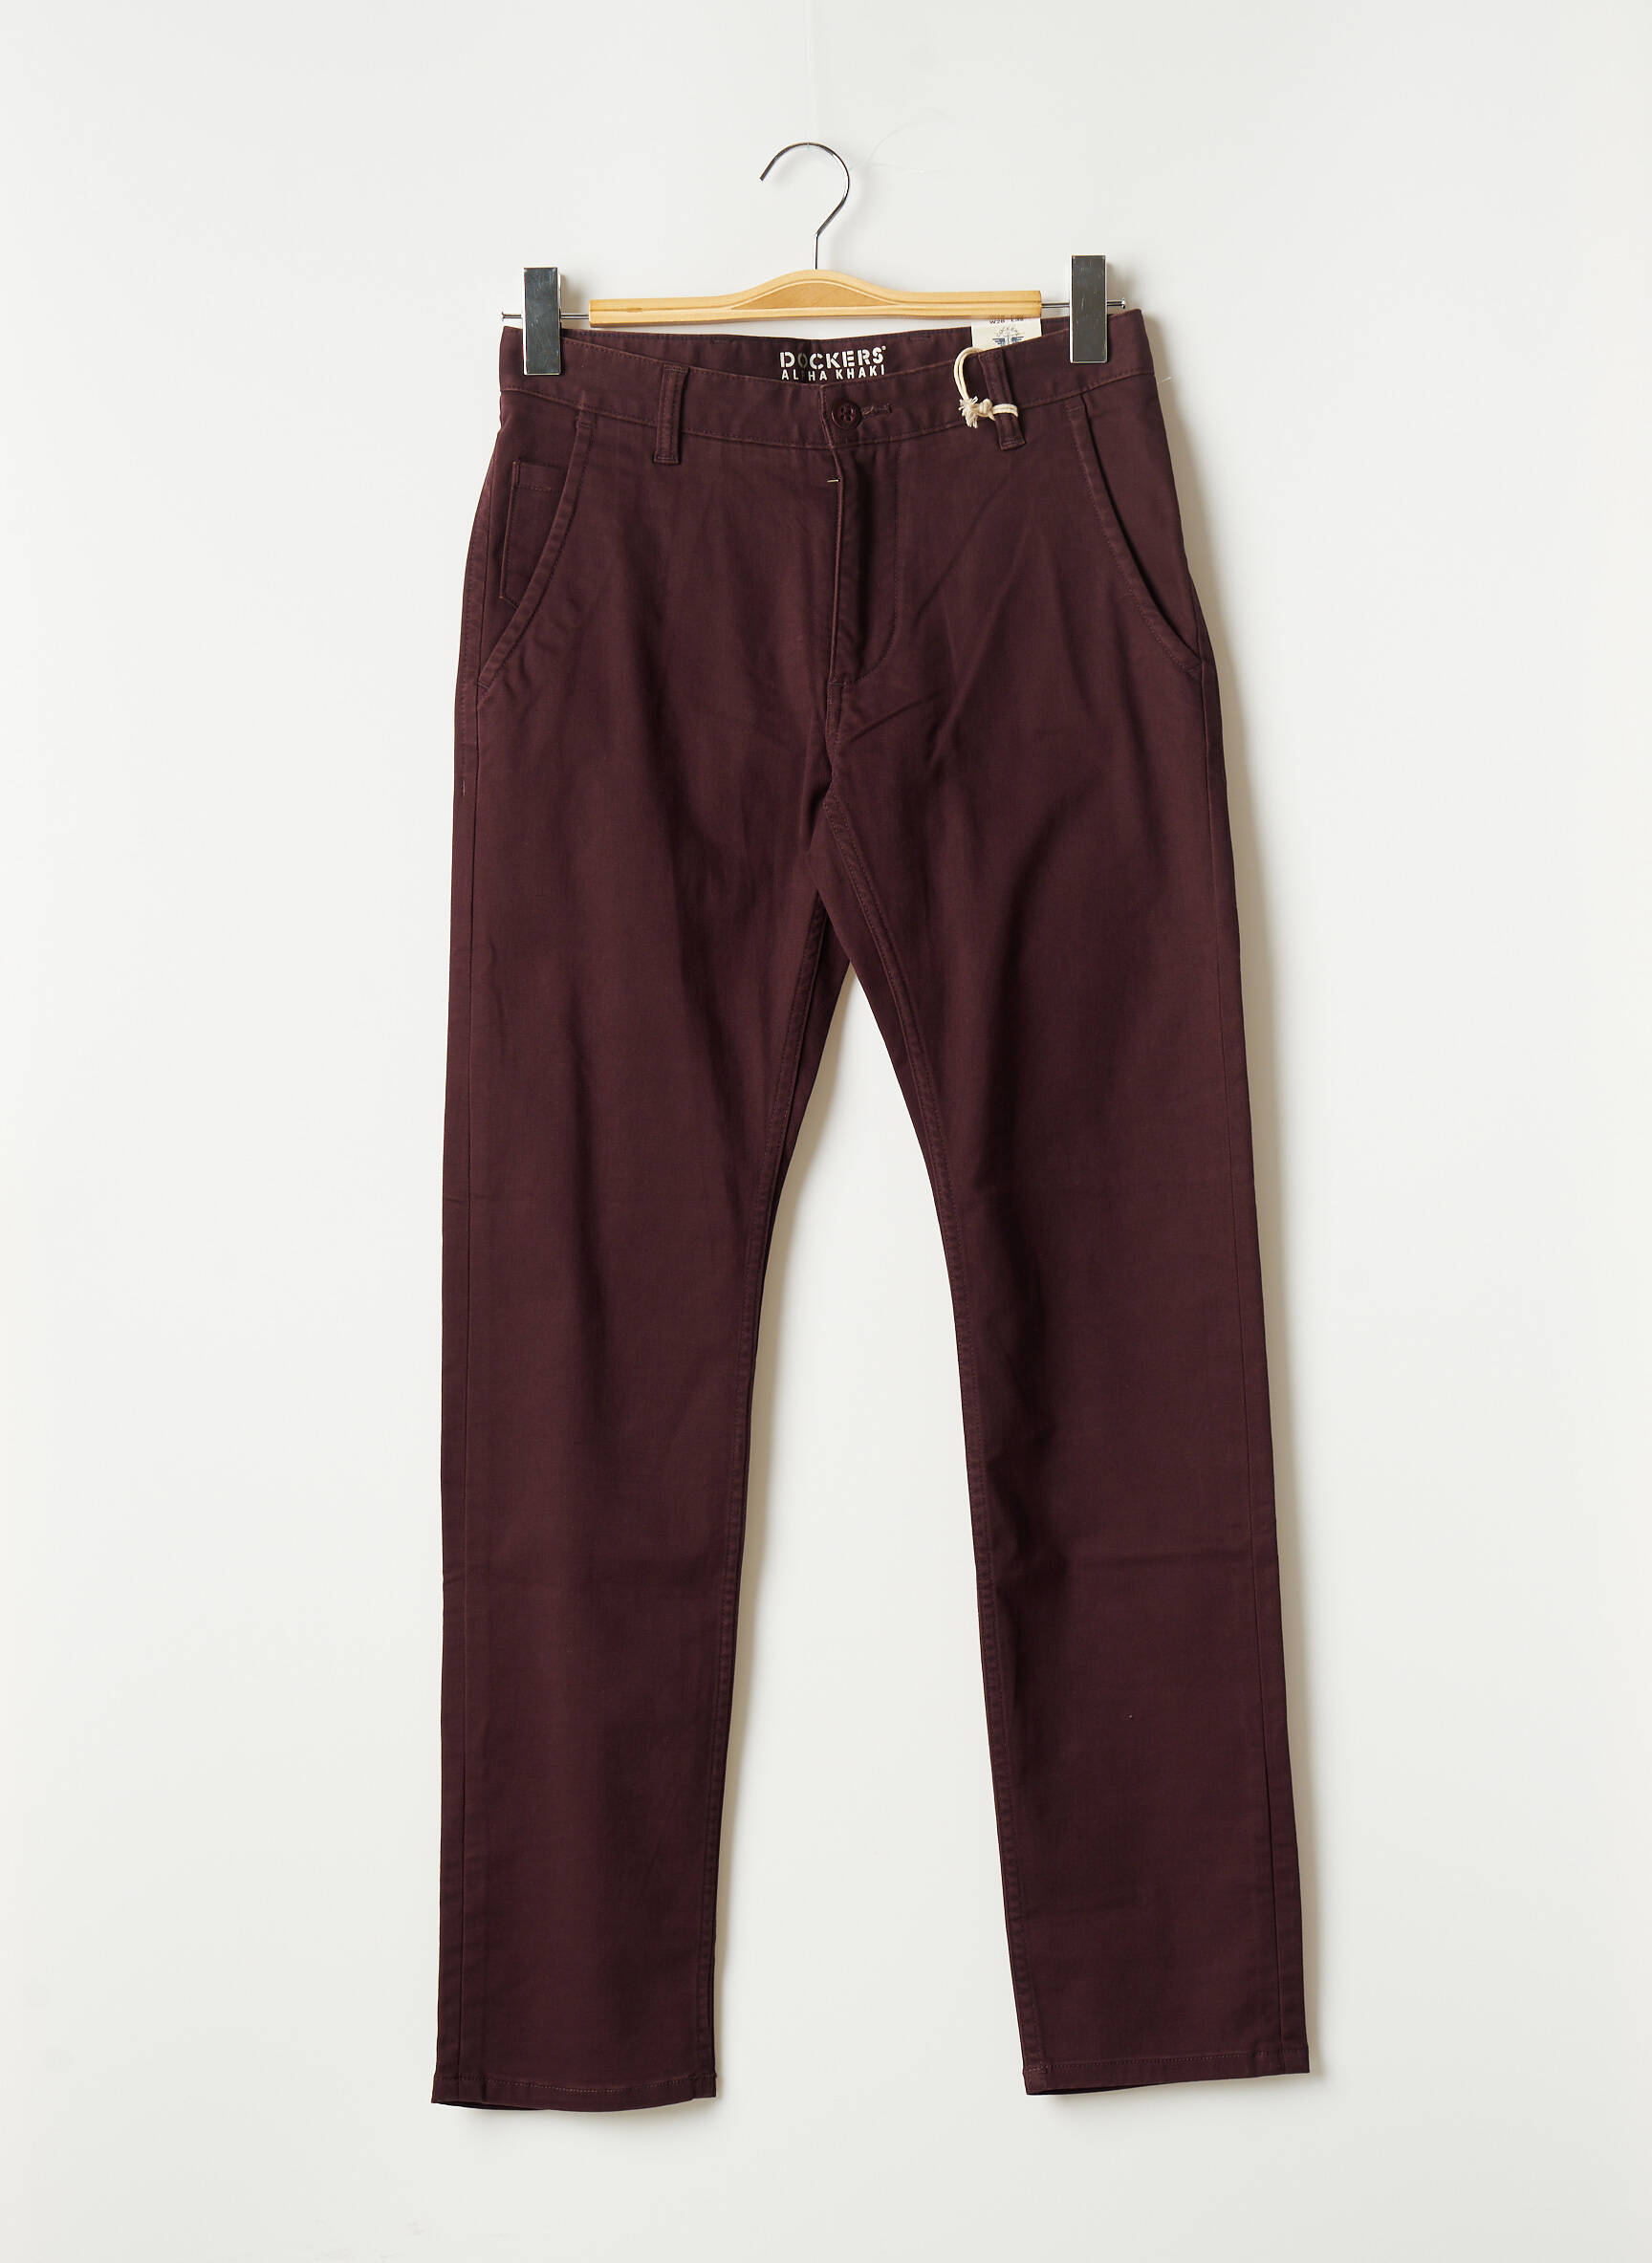 DOCKERS Pantalon Chino Pantalon De Coton Coupe Droite Homme Taille 48 W 32 L 